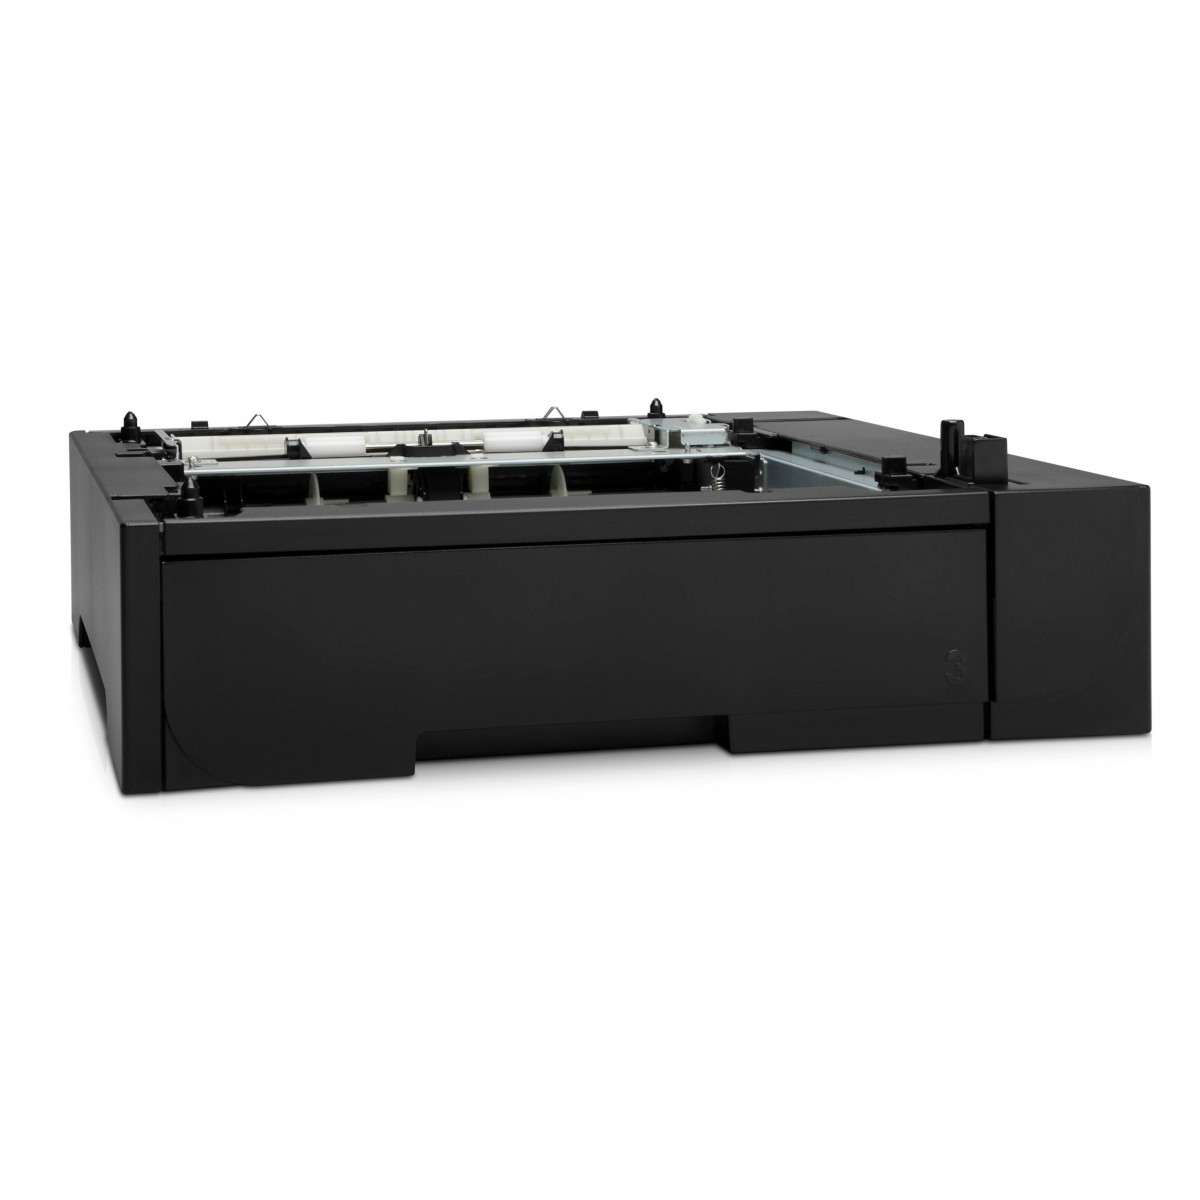 HP LaserJet 250-sheet Paper Feeder - HP LaserJet Pro 400 color M451 HP LaserJet Pro 300 color MFP M375 HP LaserJet Pro 400 color